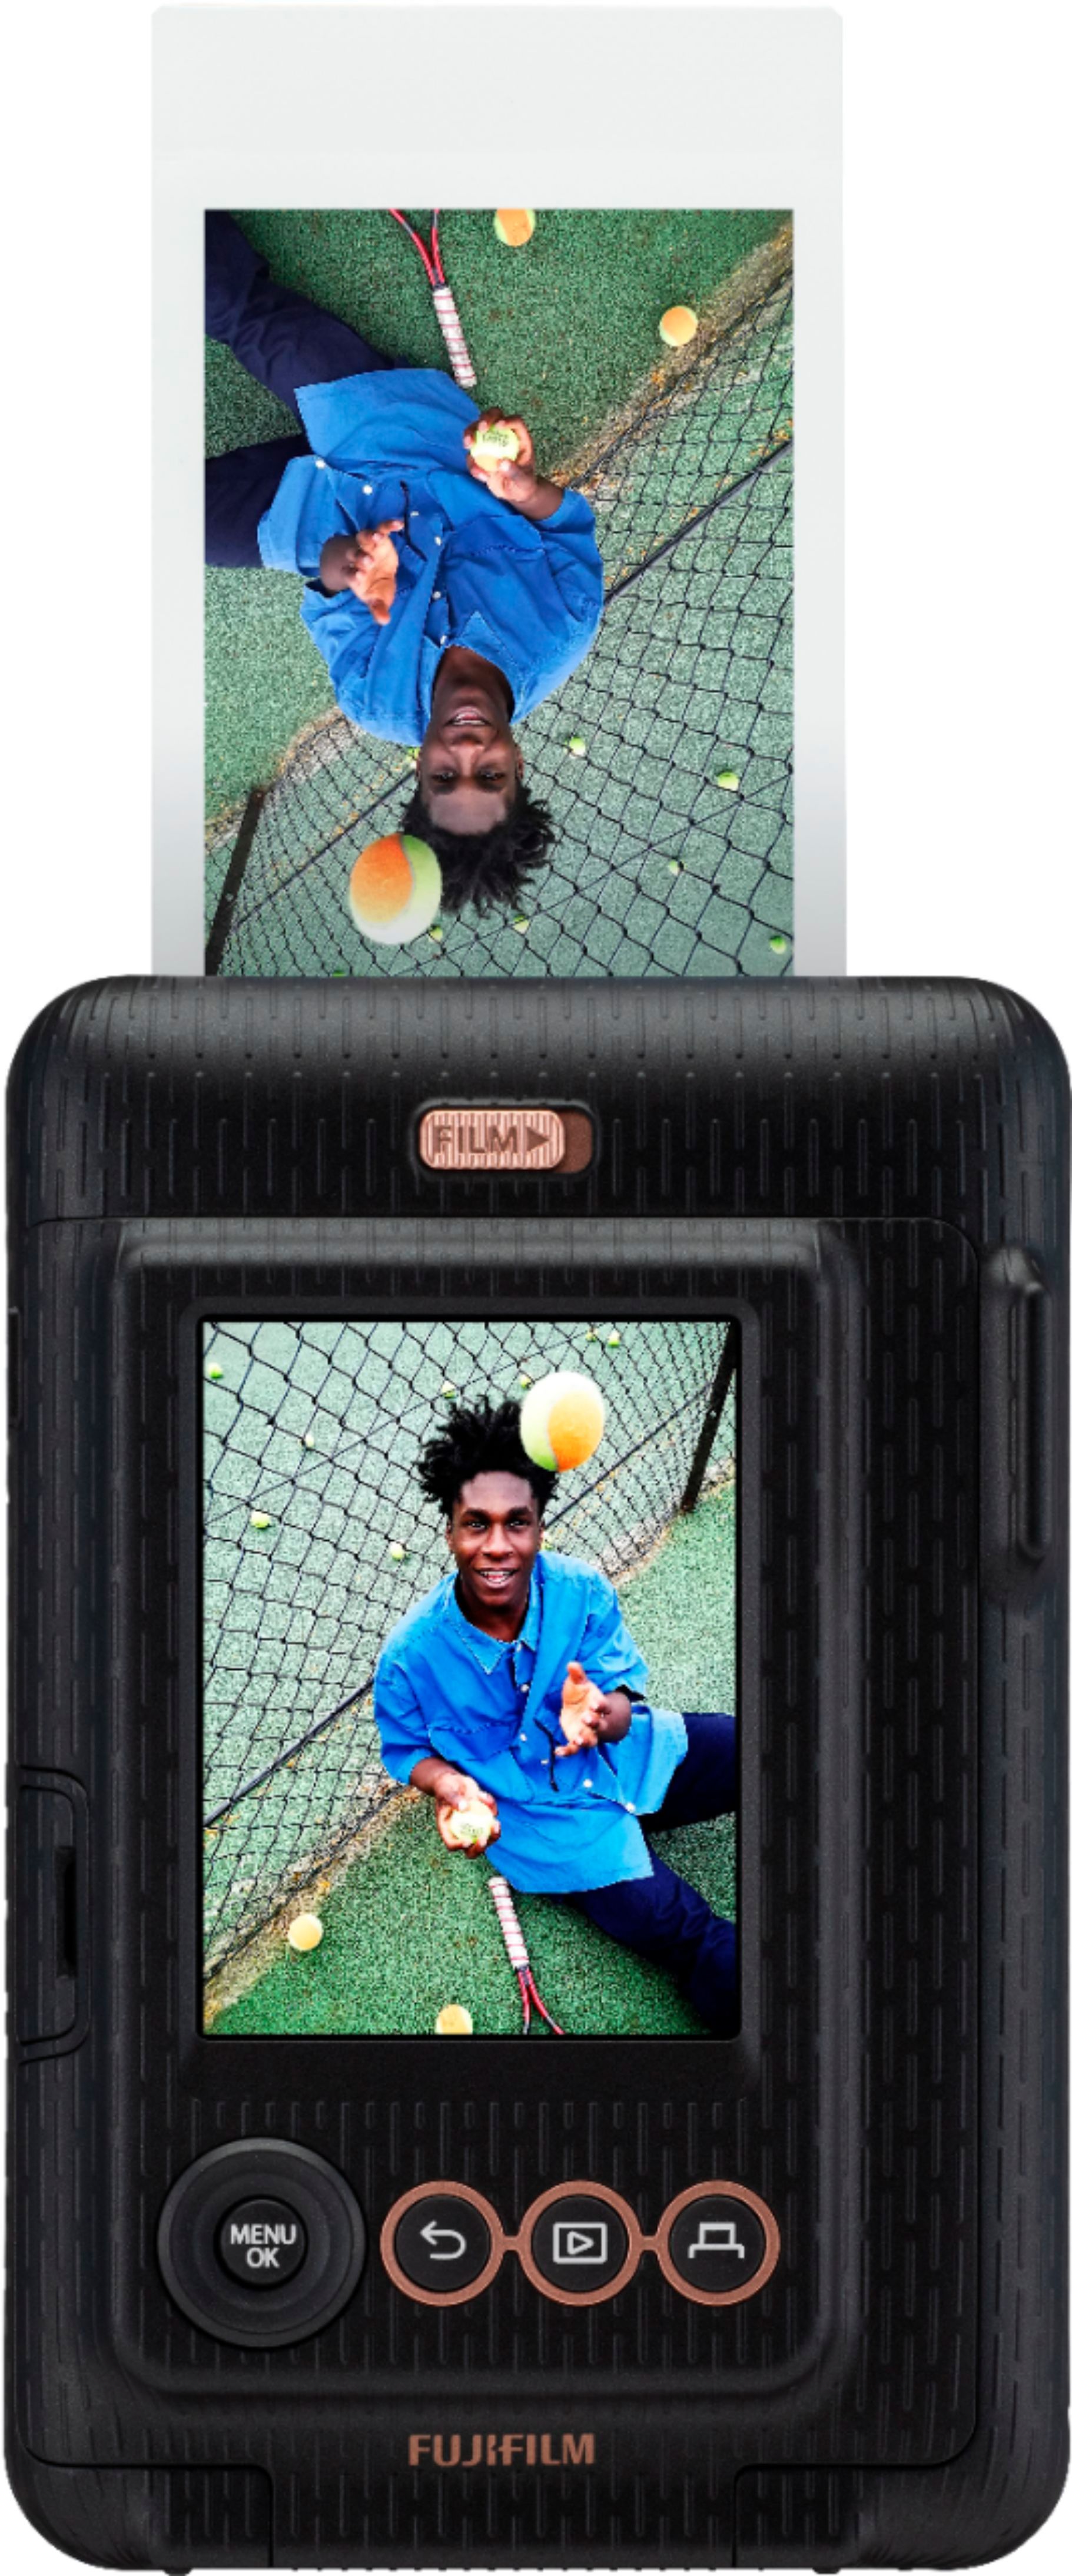 Fujifilm INSTAX MINI LiPlay Instant Film Camera Elegant Black 16631813 -  Best Buy